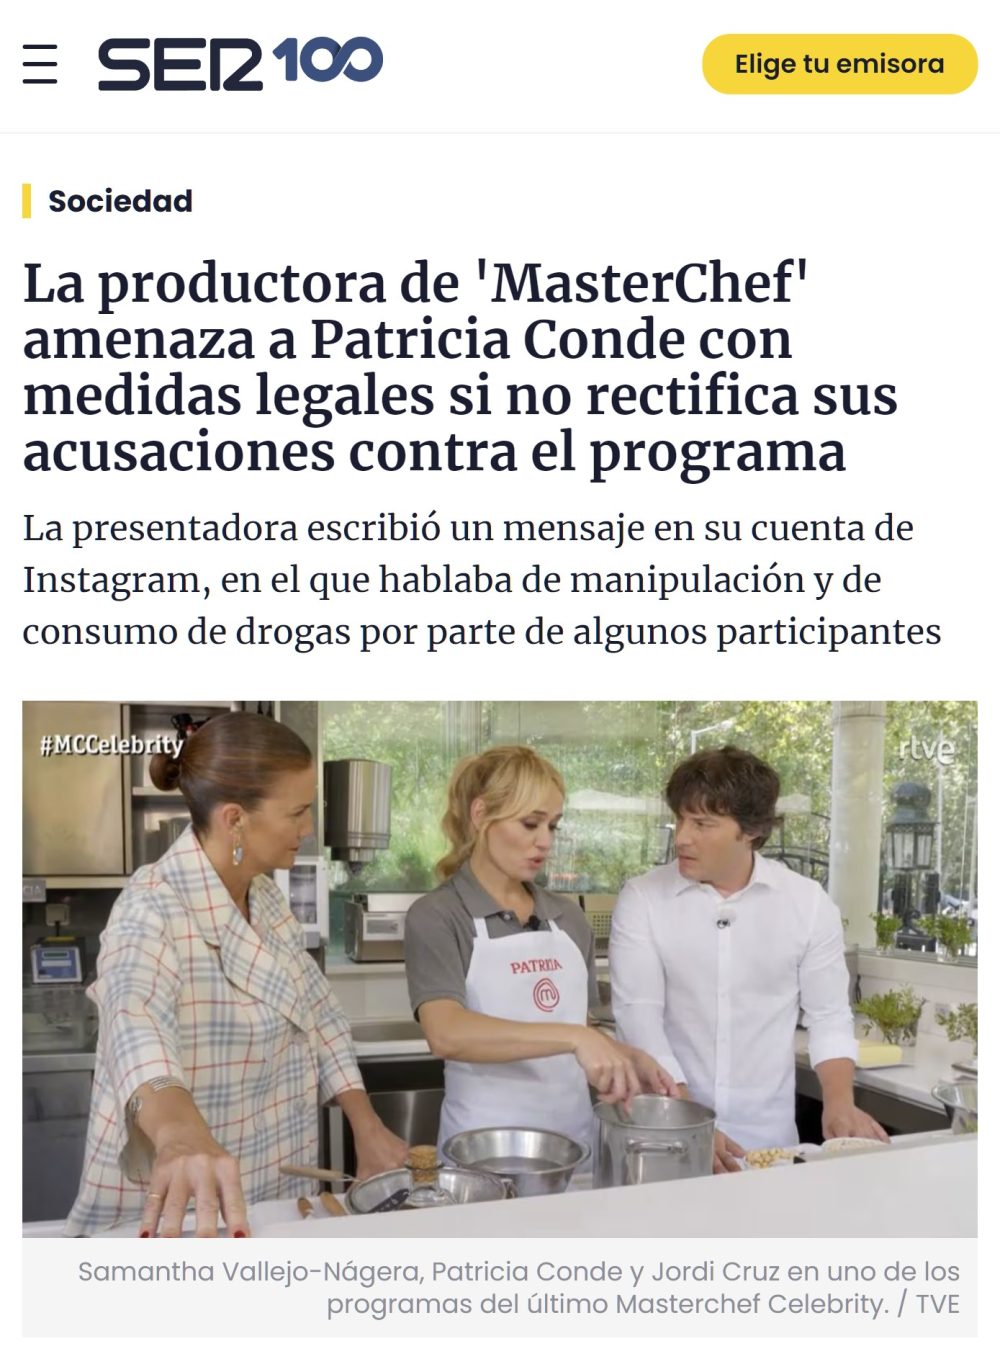 La productora de 'Master Chef' amenaza con denunciar a Patricia Conde.